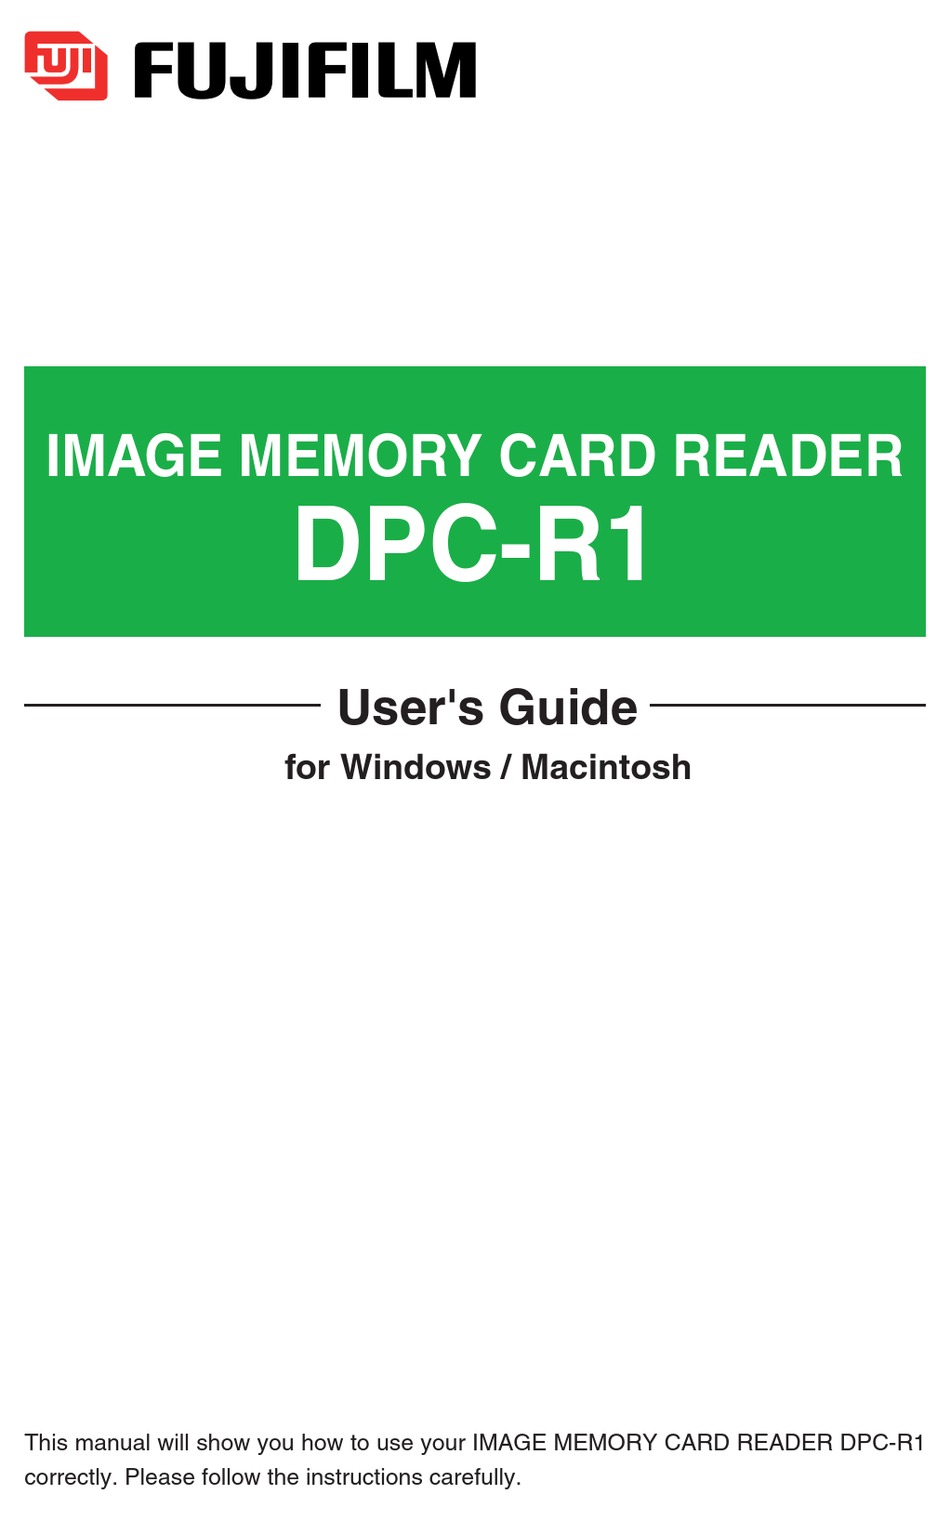 FUJIFILM DPC-R1 CARD READER USER MANUAL | ManualsLib